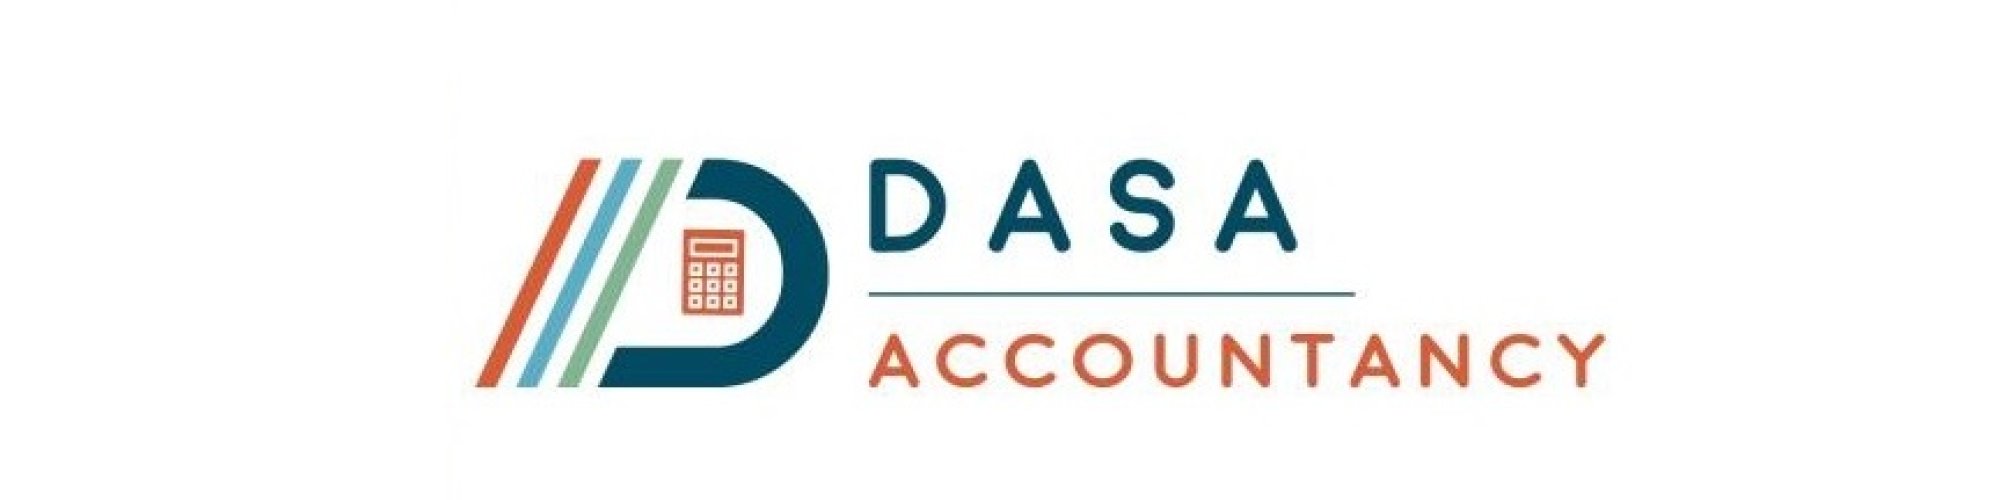 DASA Accountancy Limited